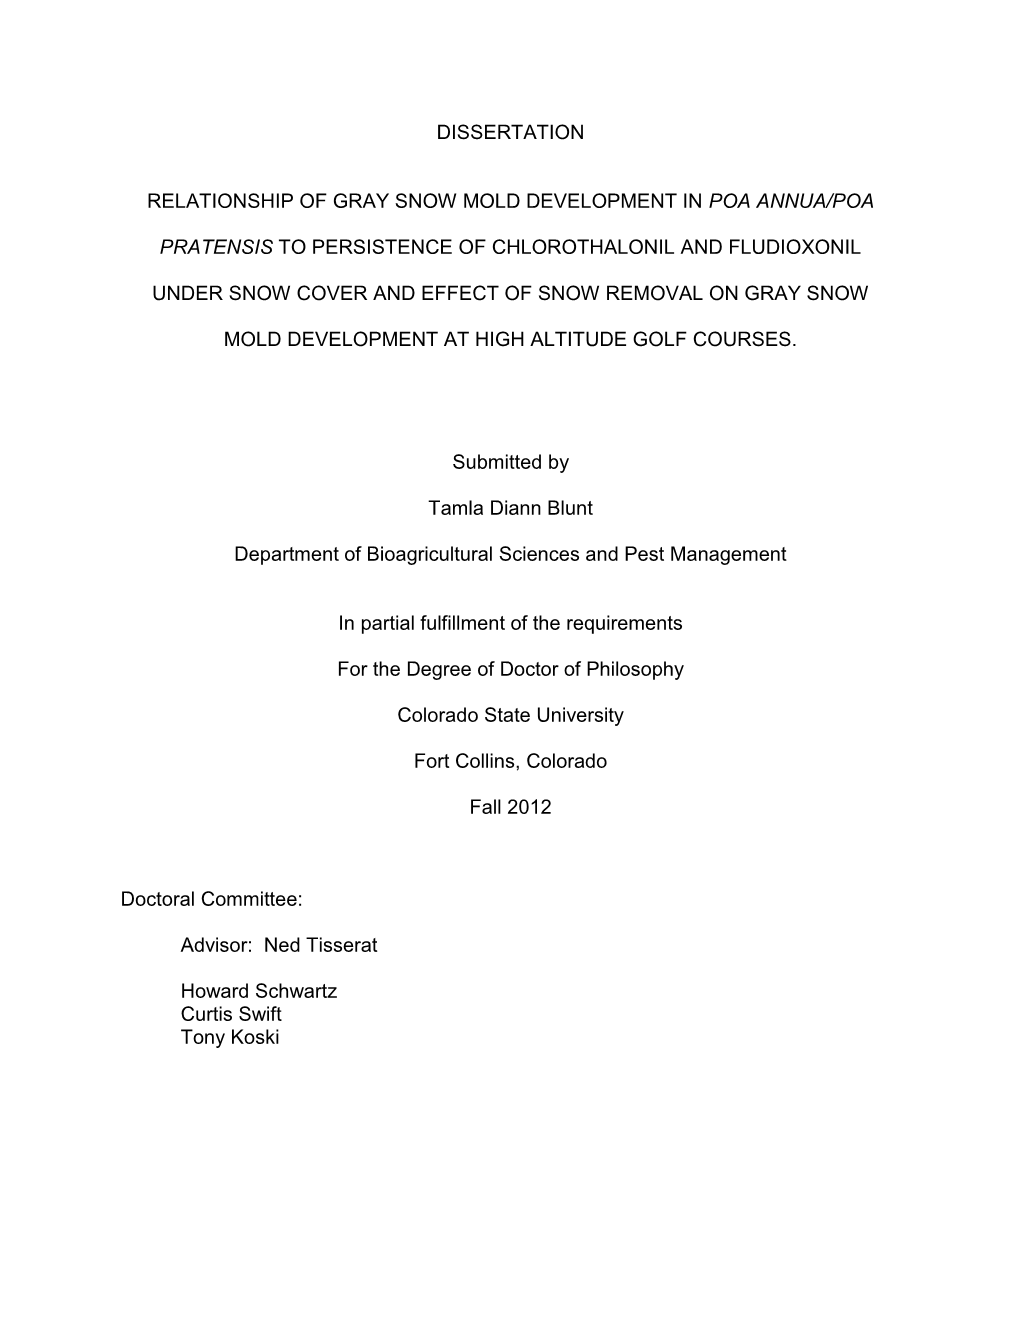 Dissertation Relationship of Gray Snow Mold